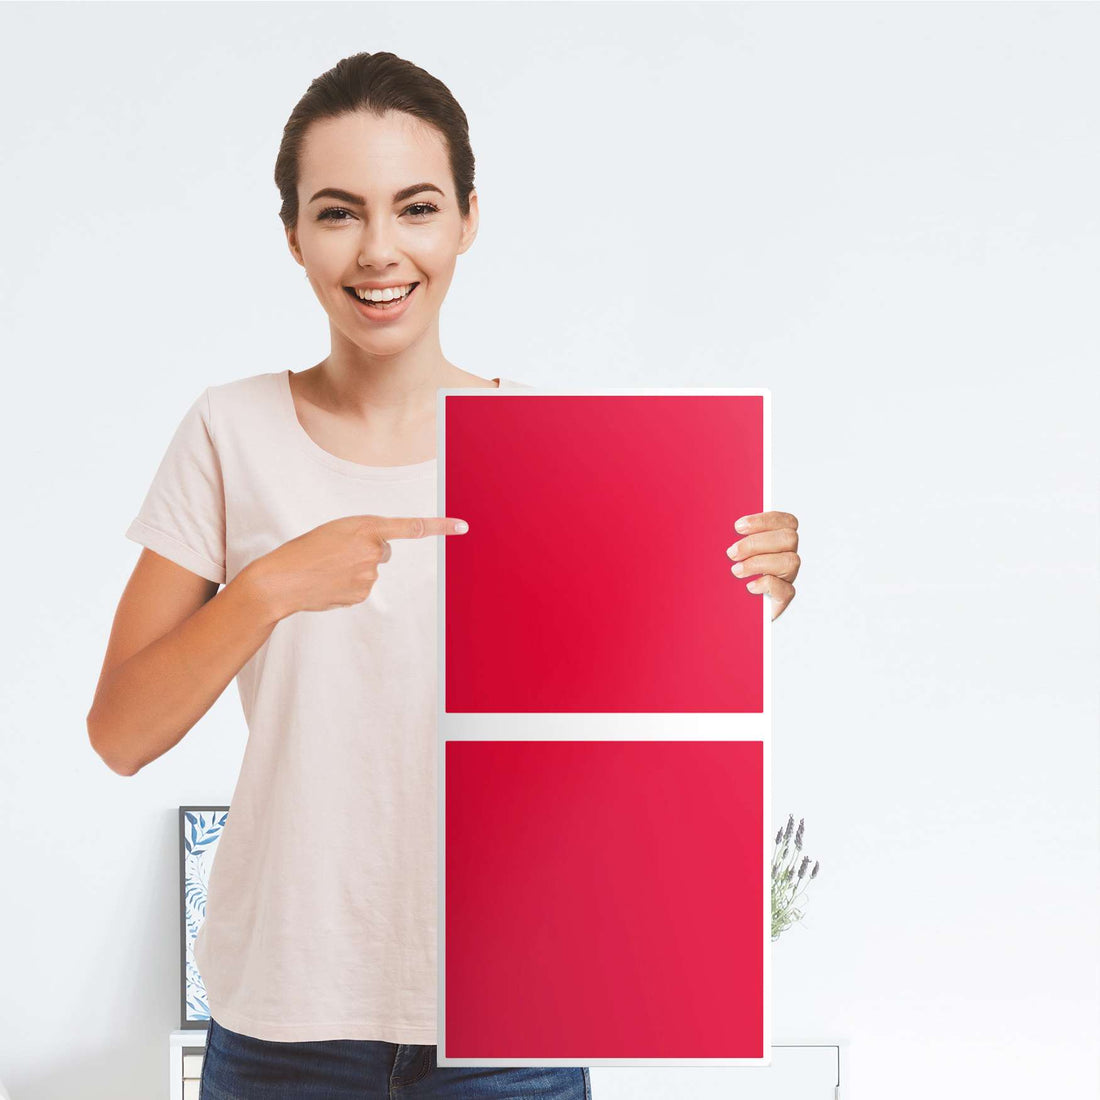 Klebefolie für Möbel Rot Light - IKEA Expedit Regal 2 Türen Hoch - Folie